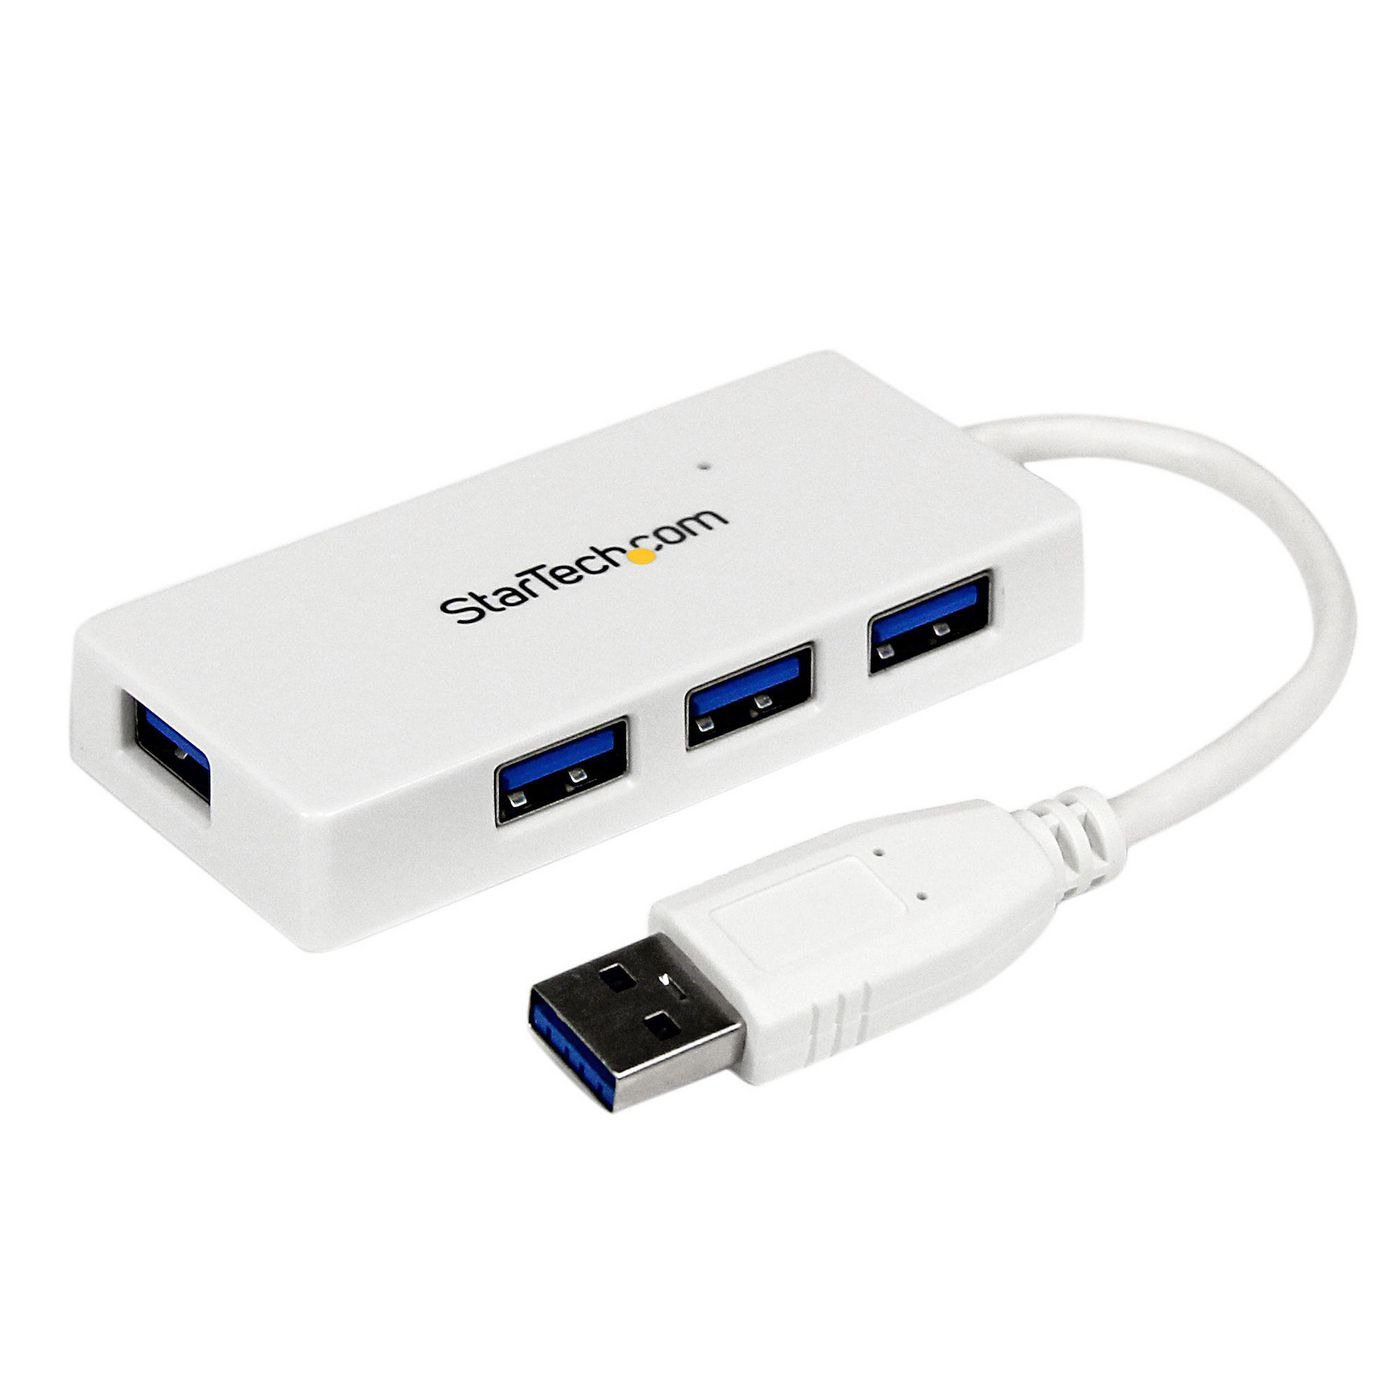 STARTECH.COM 4 Port USB 3.0 SuperSpeed Hub - Weiss - Portabler externer Mini USB Hub mit eingebautem